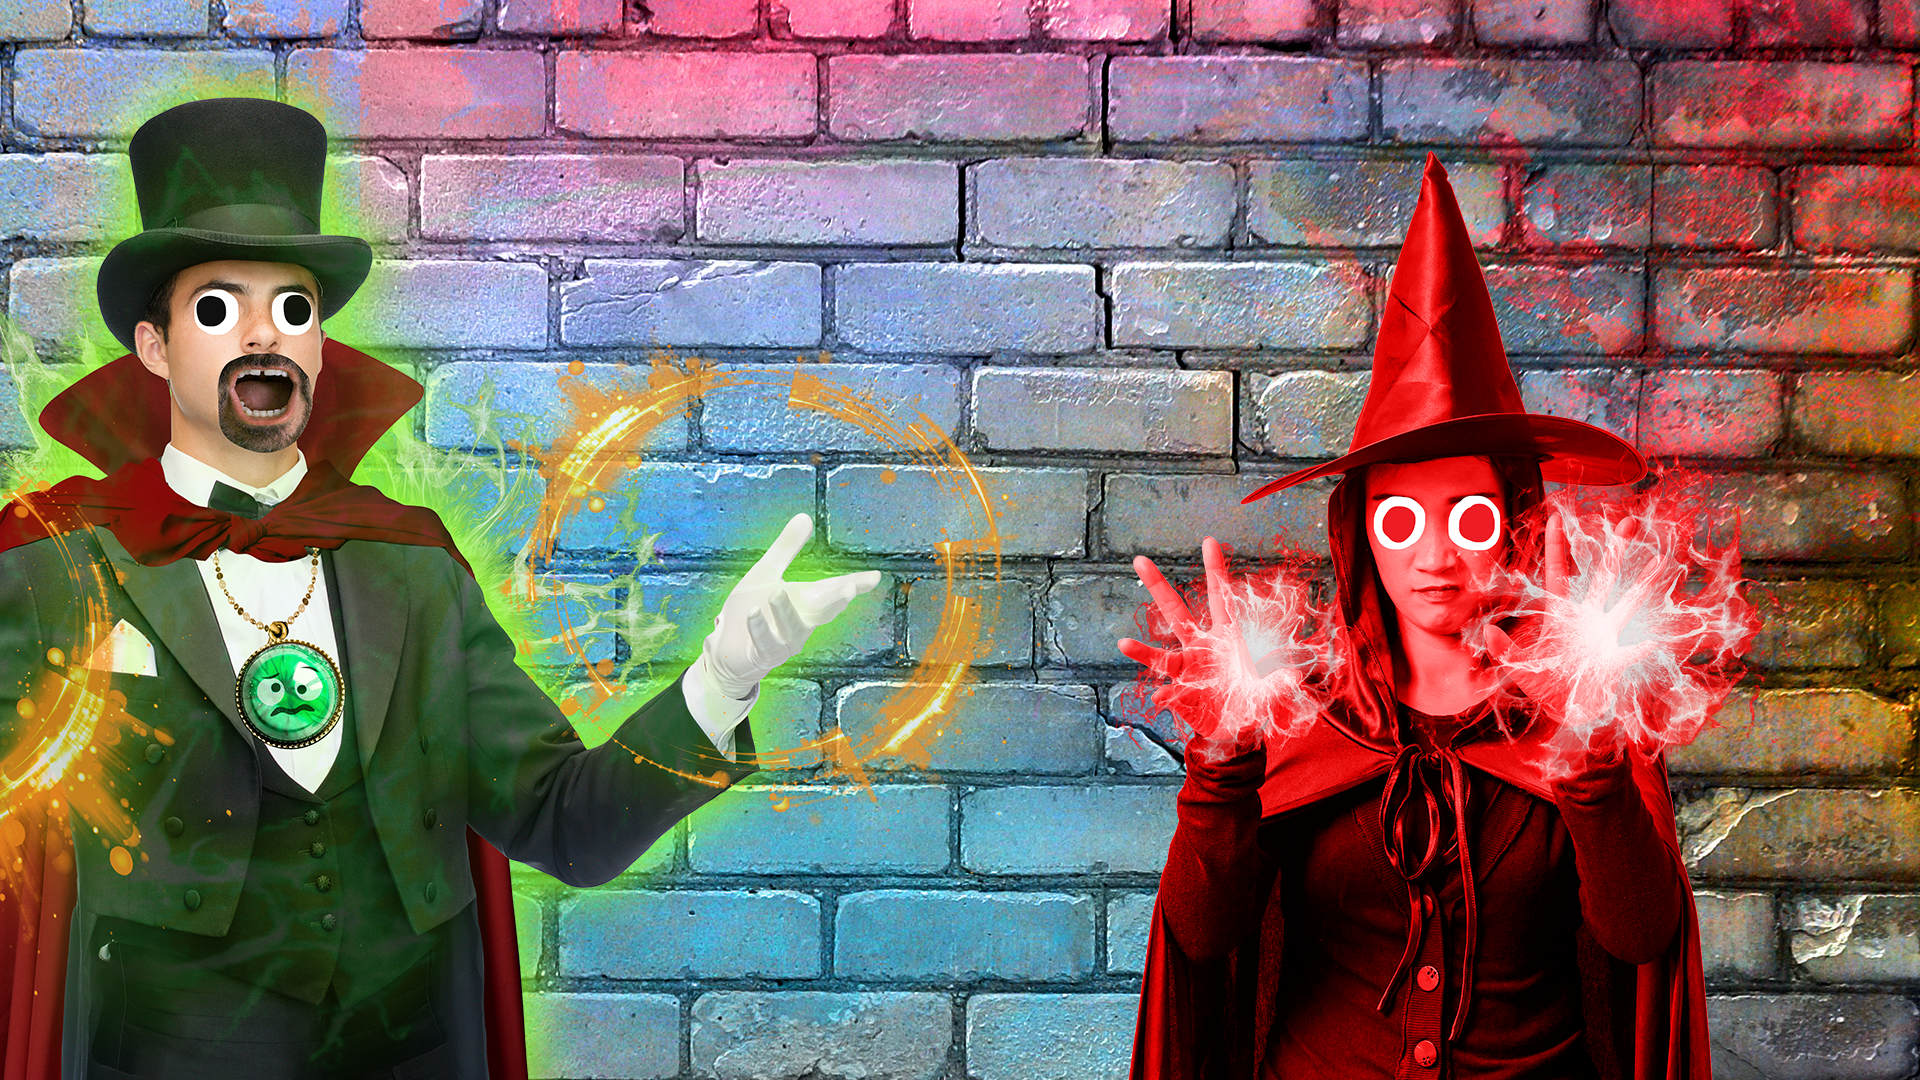 Dr Strange and Scarlet Witch on brick background